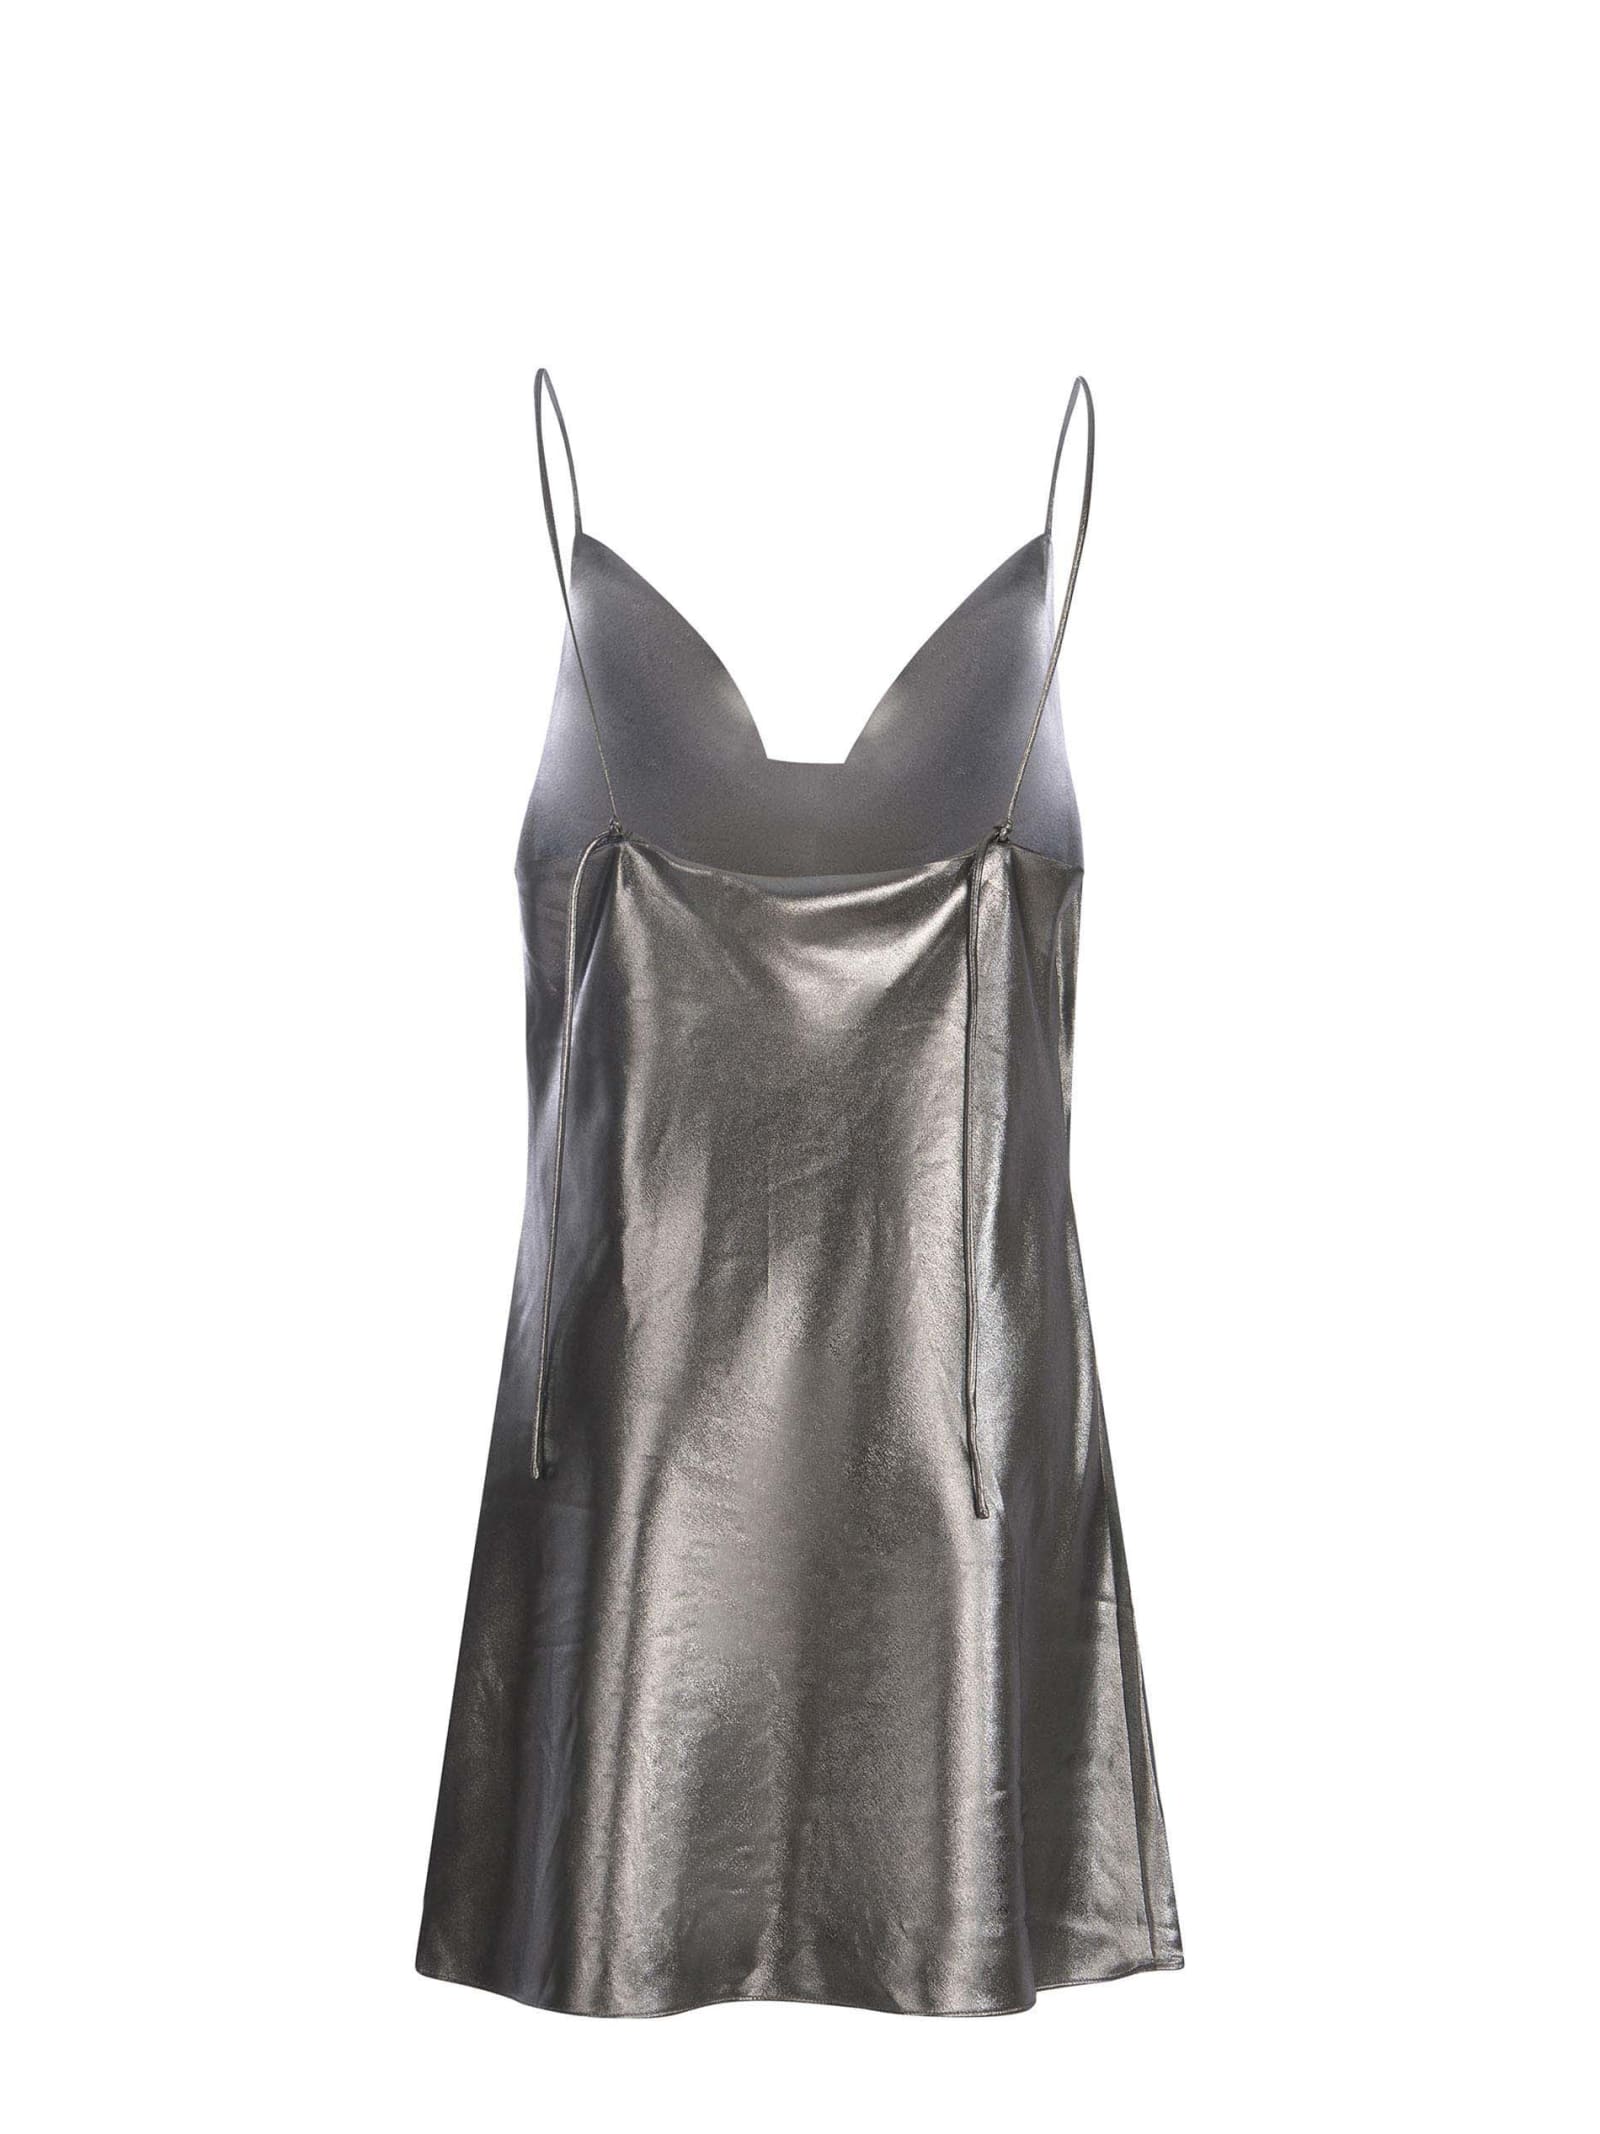 Shop Rotate Birger Christensen Mini Dress Rotate Made Of Metallic Fabric In Argento